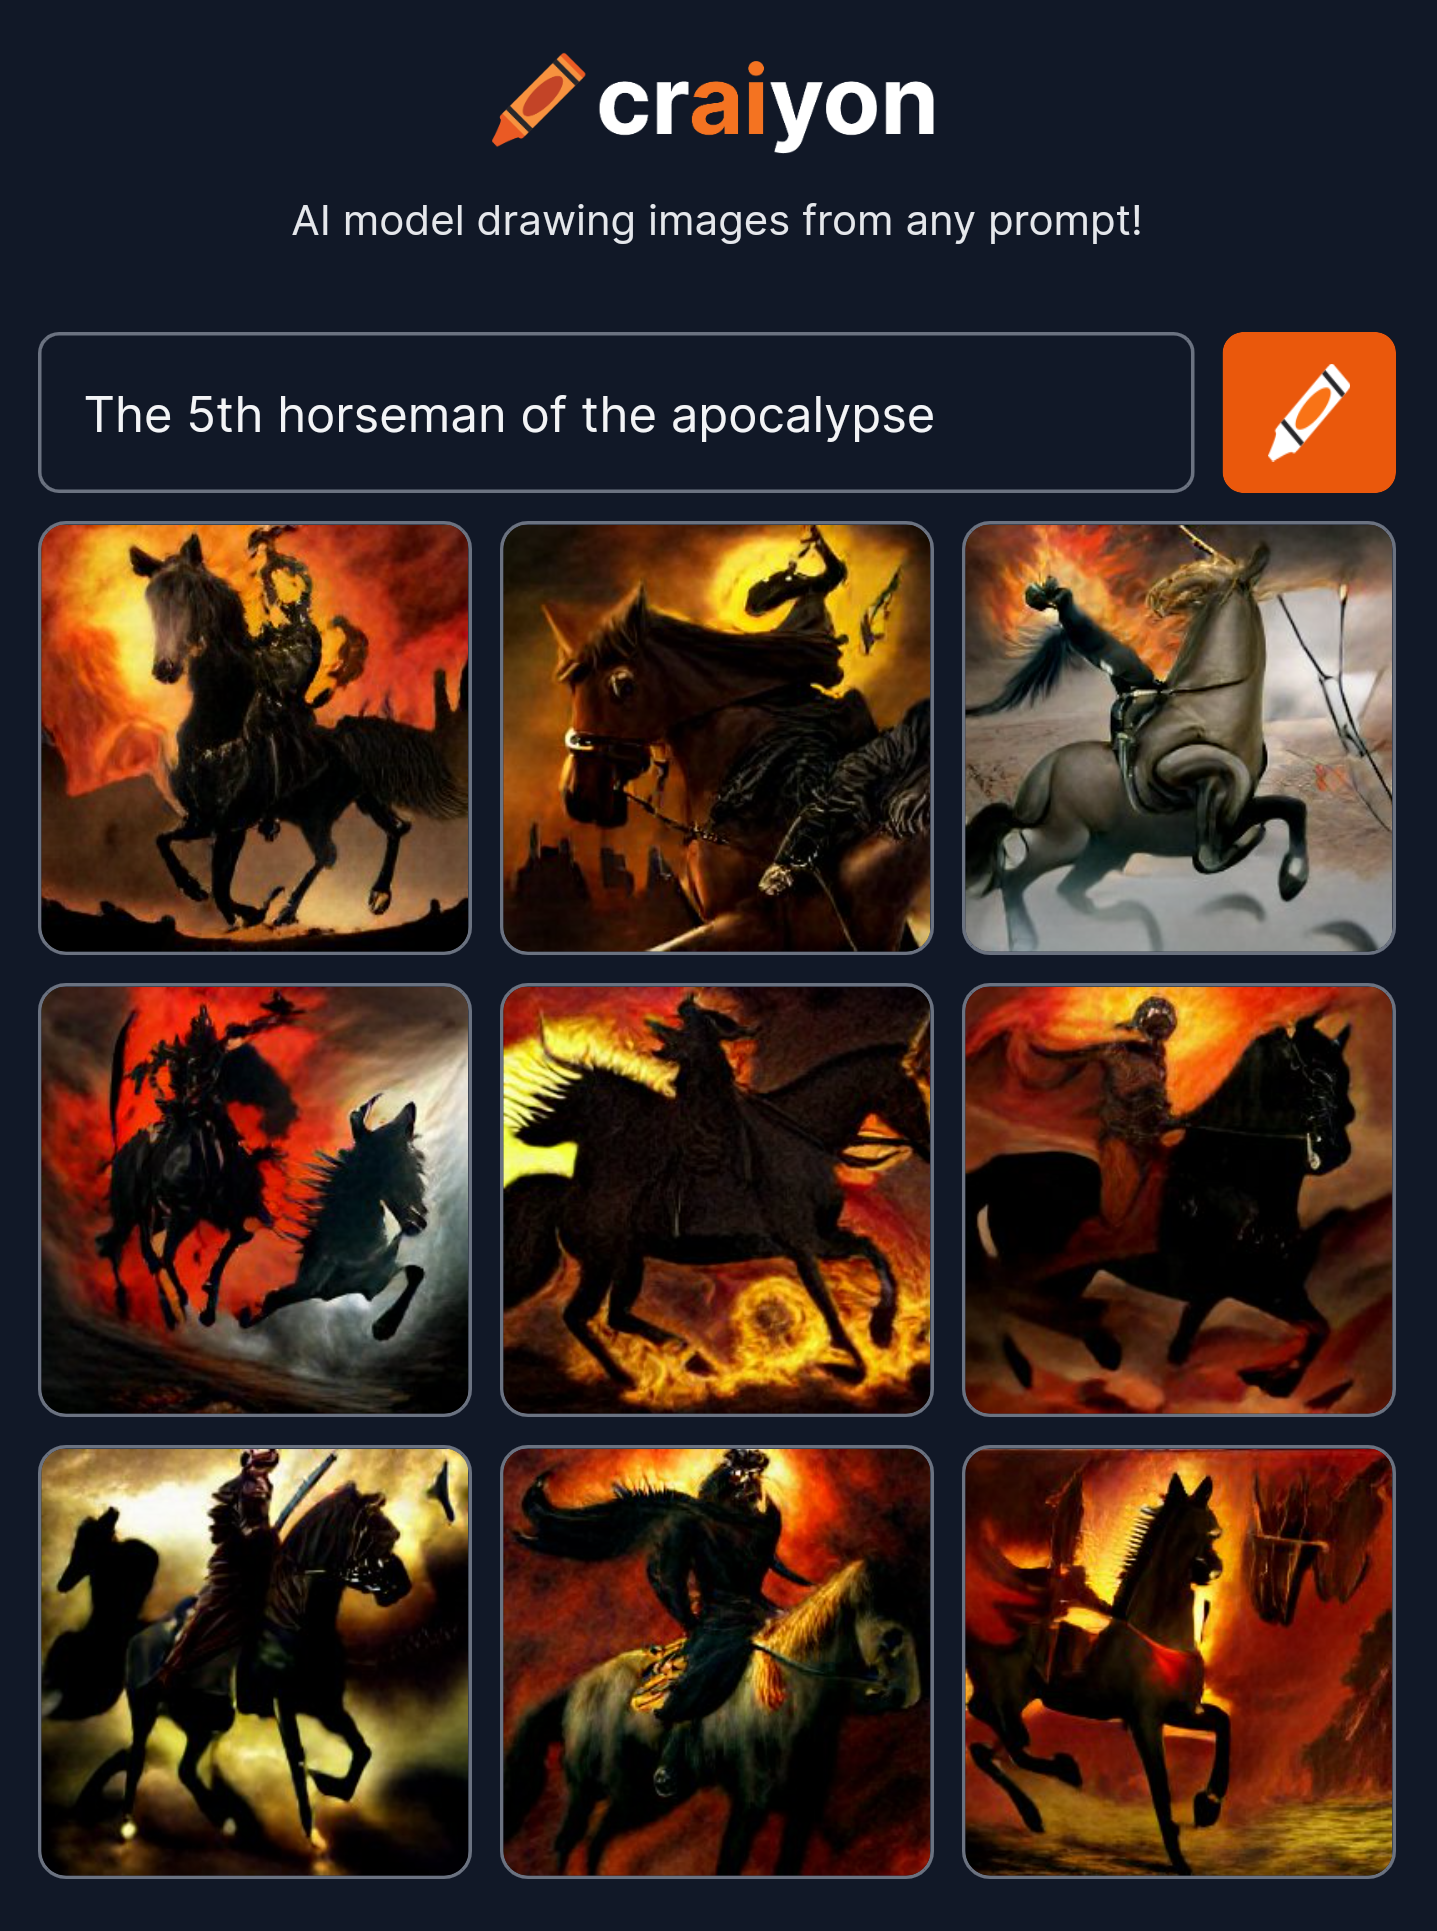 craiyon_032223_The_5th_horseman_of_the_apocalypse_nbsp_.jpg.png